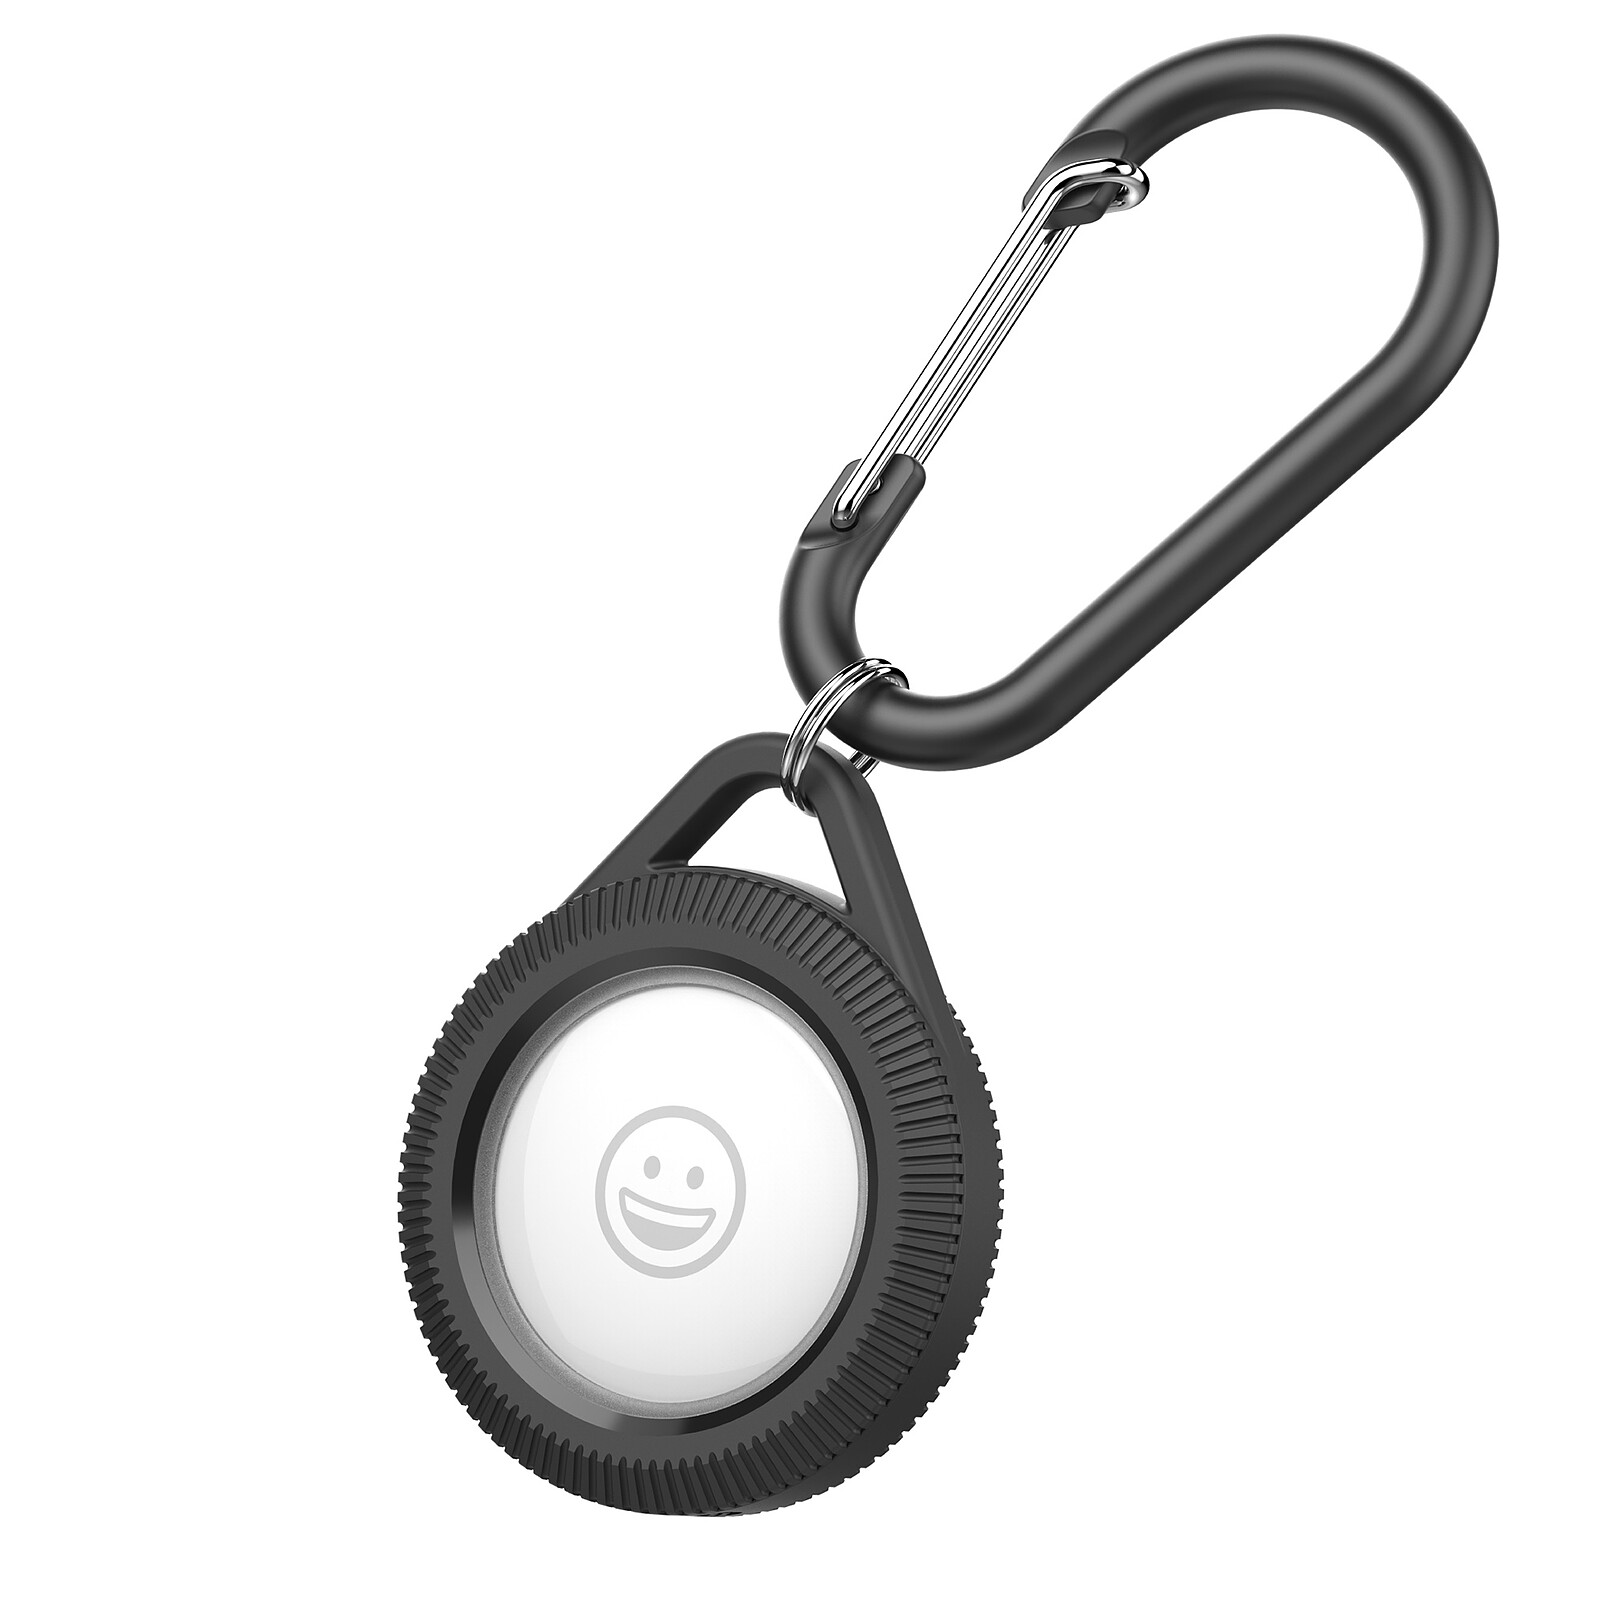 Catalyst Total Protection Hang-It AirTag Noir - Accessoires Apple